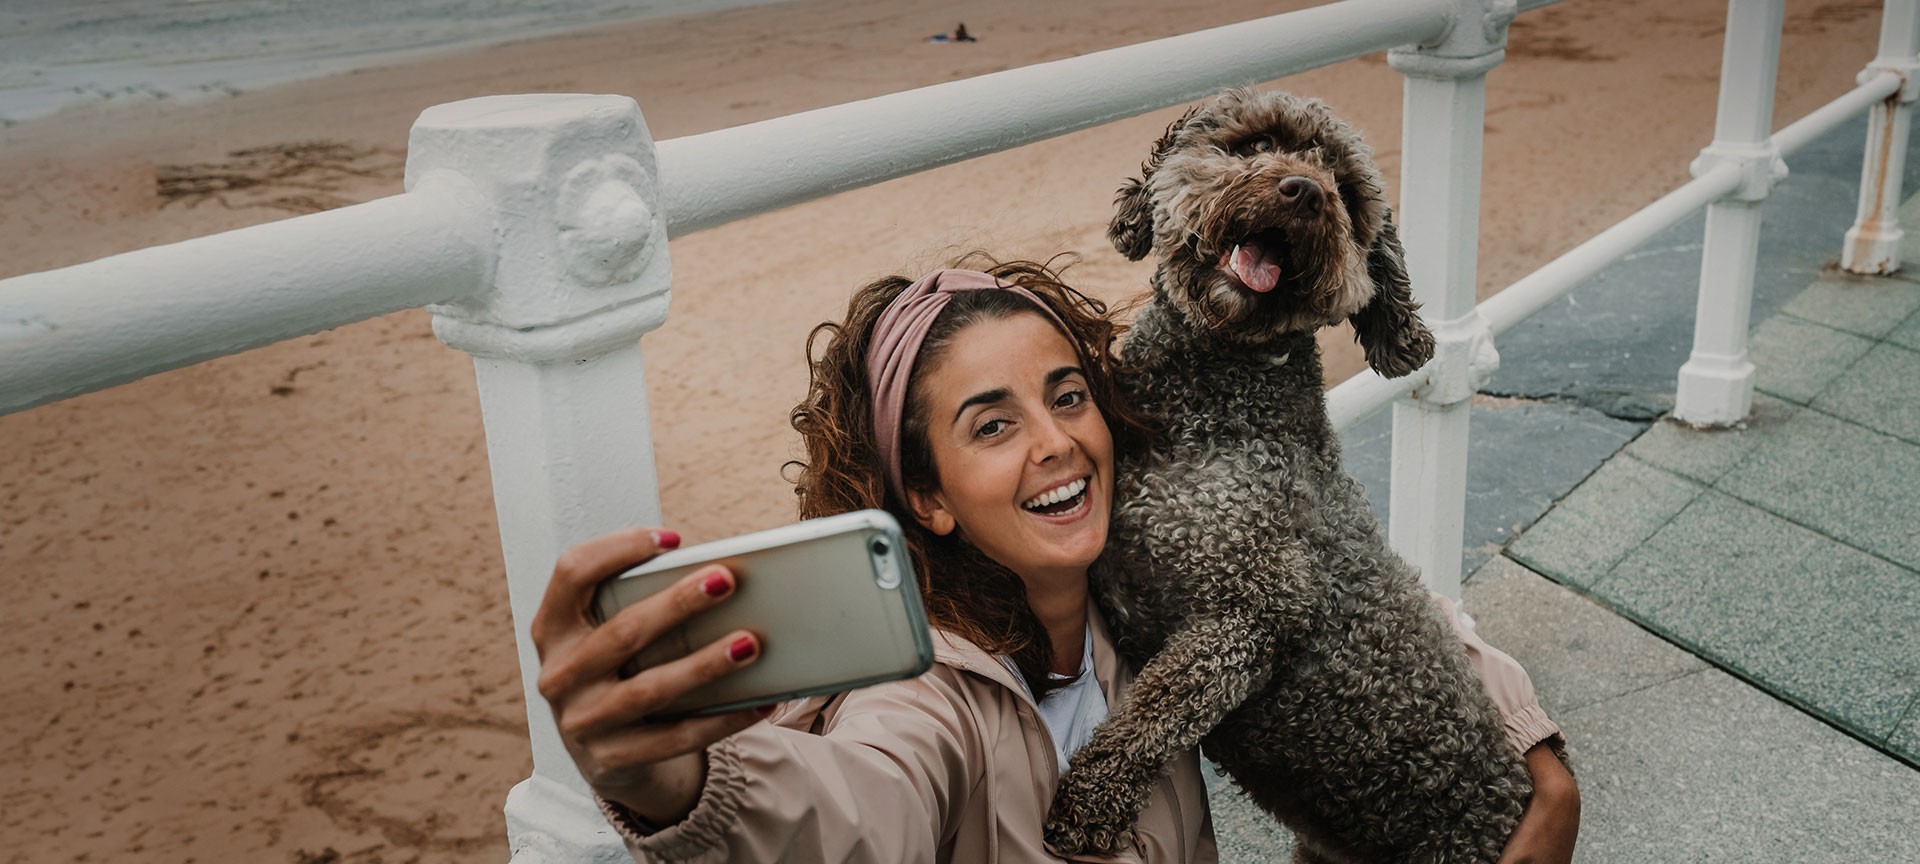 Tourist taking a selfie with their dog on a beach in Gijón, Asturias